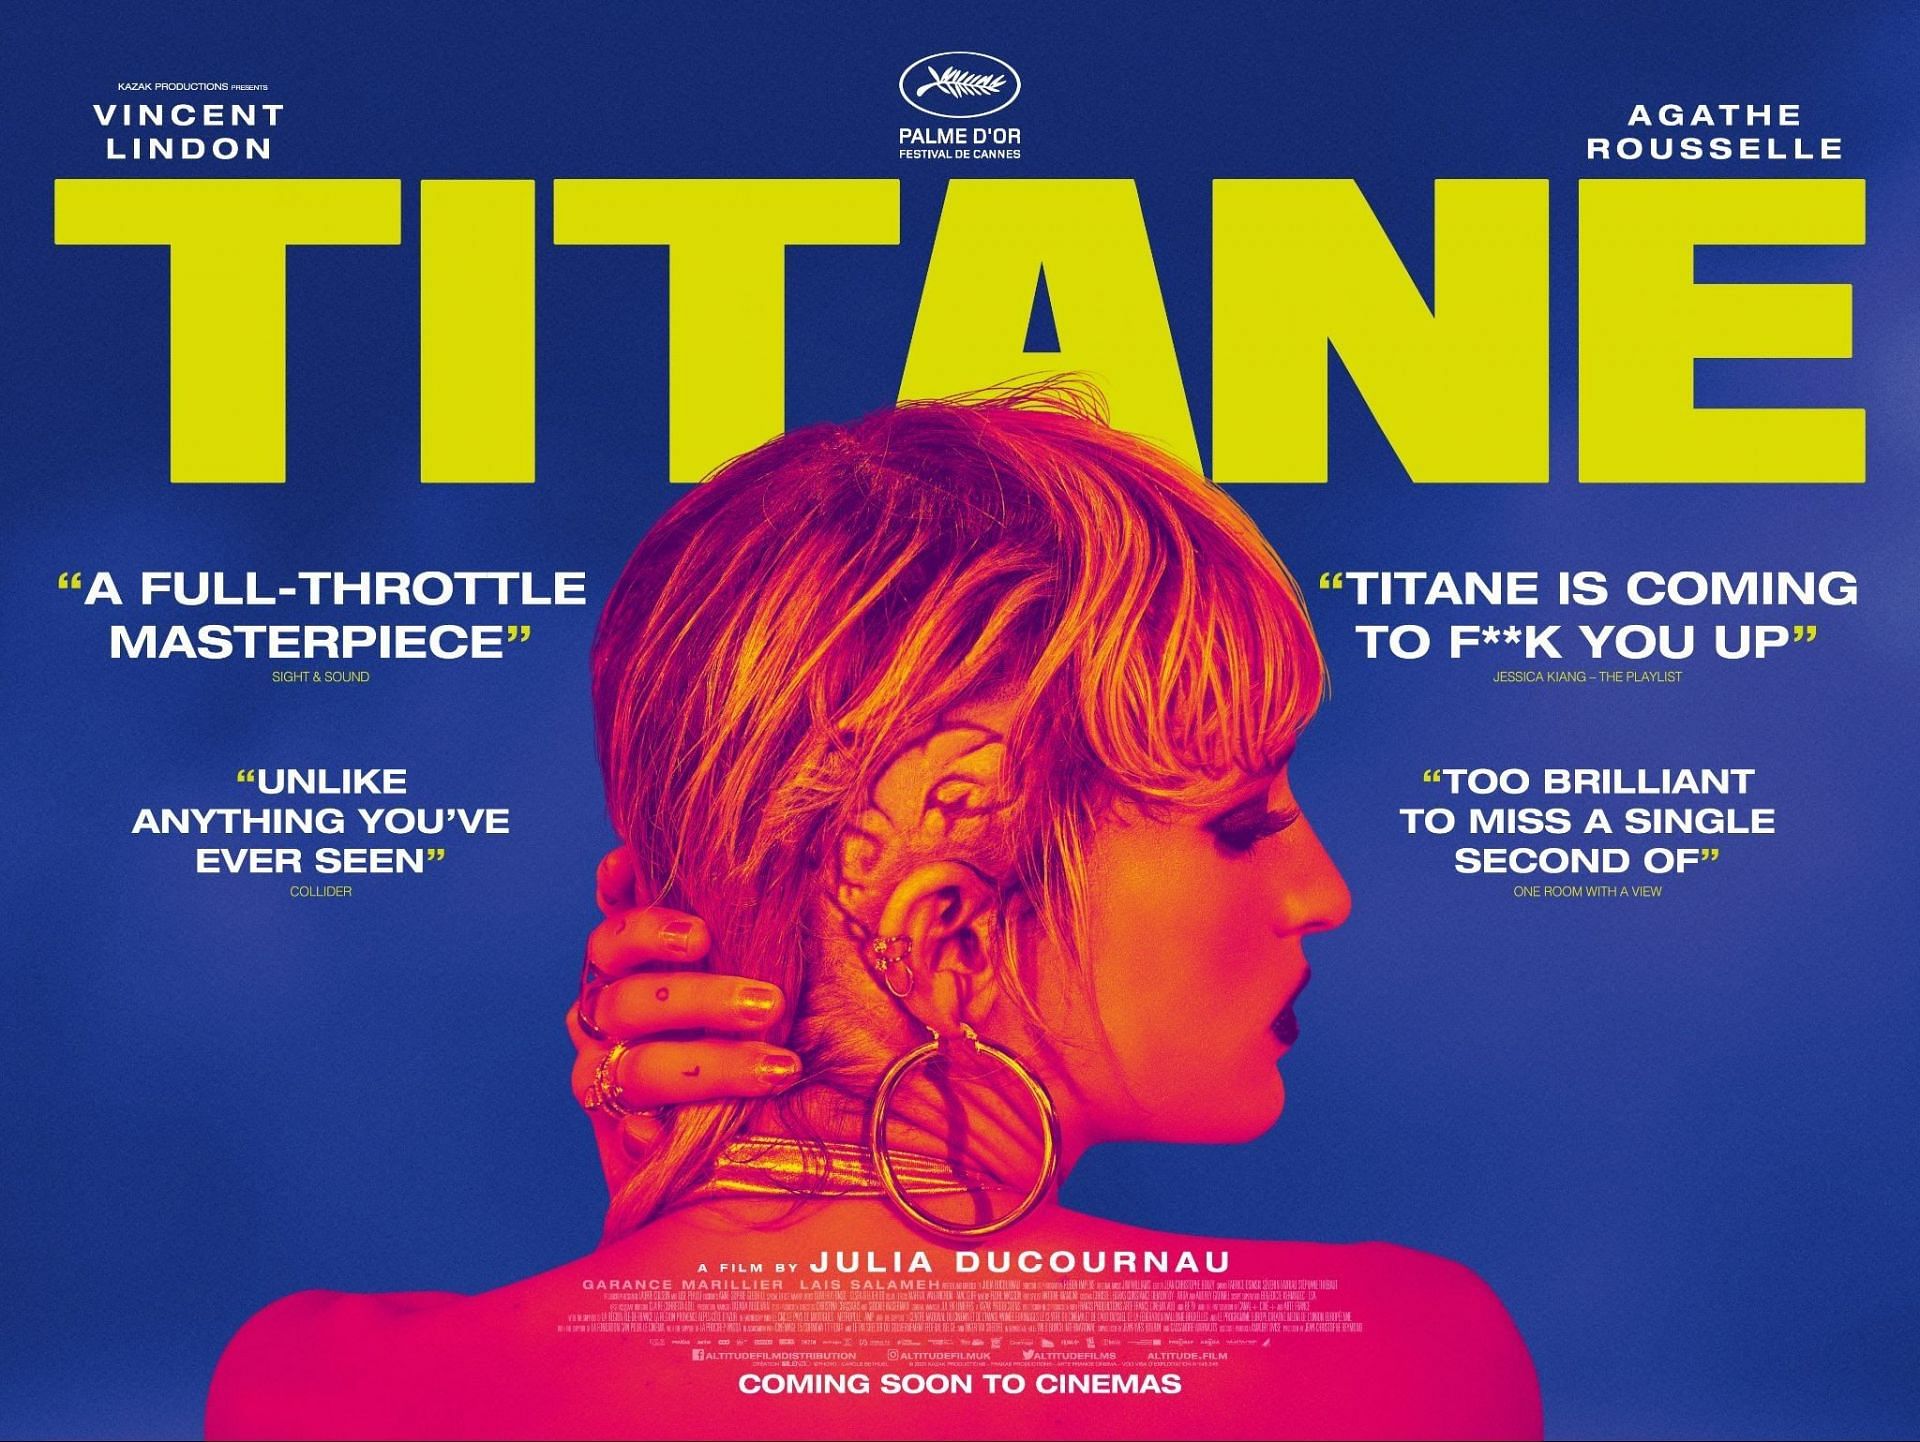 Titane (Image via Kazak Productions)